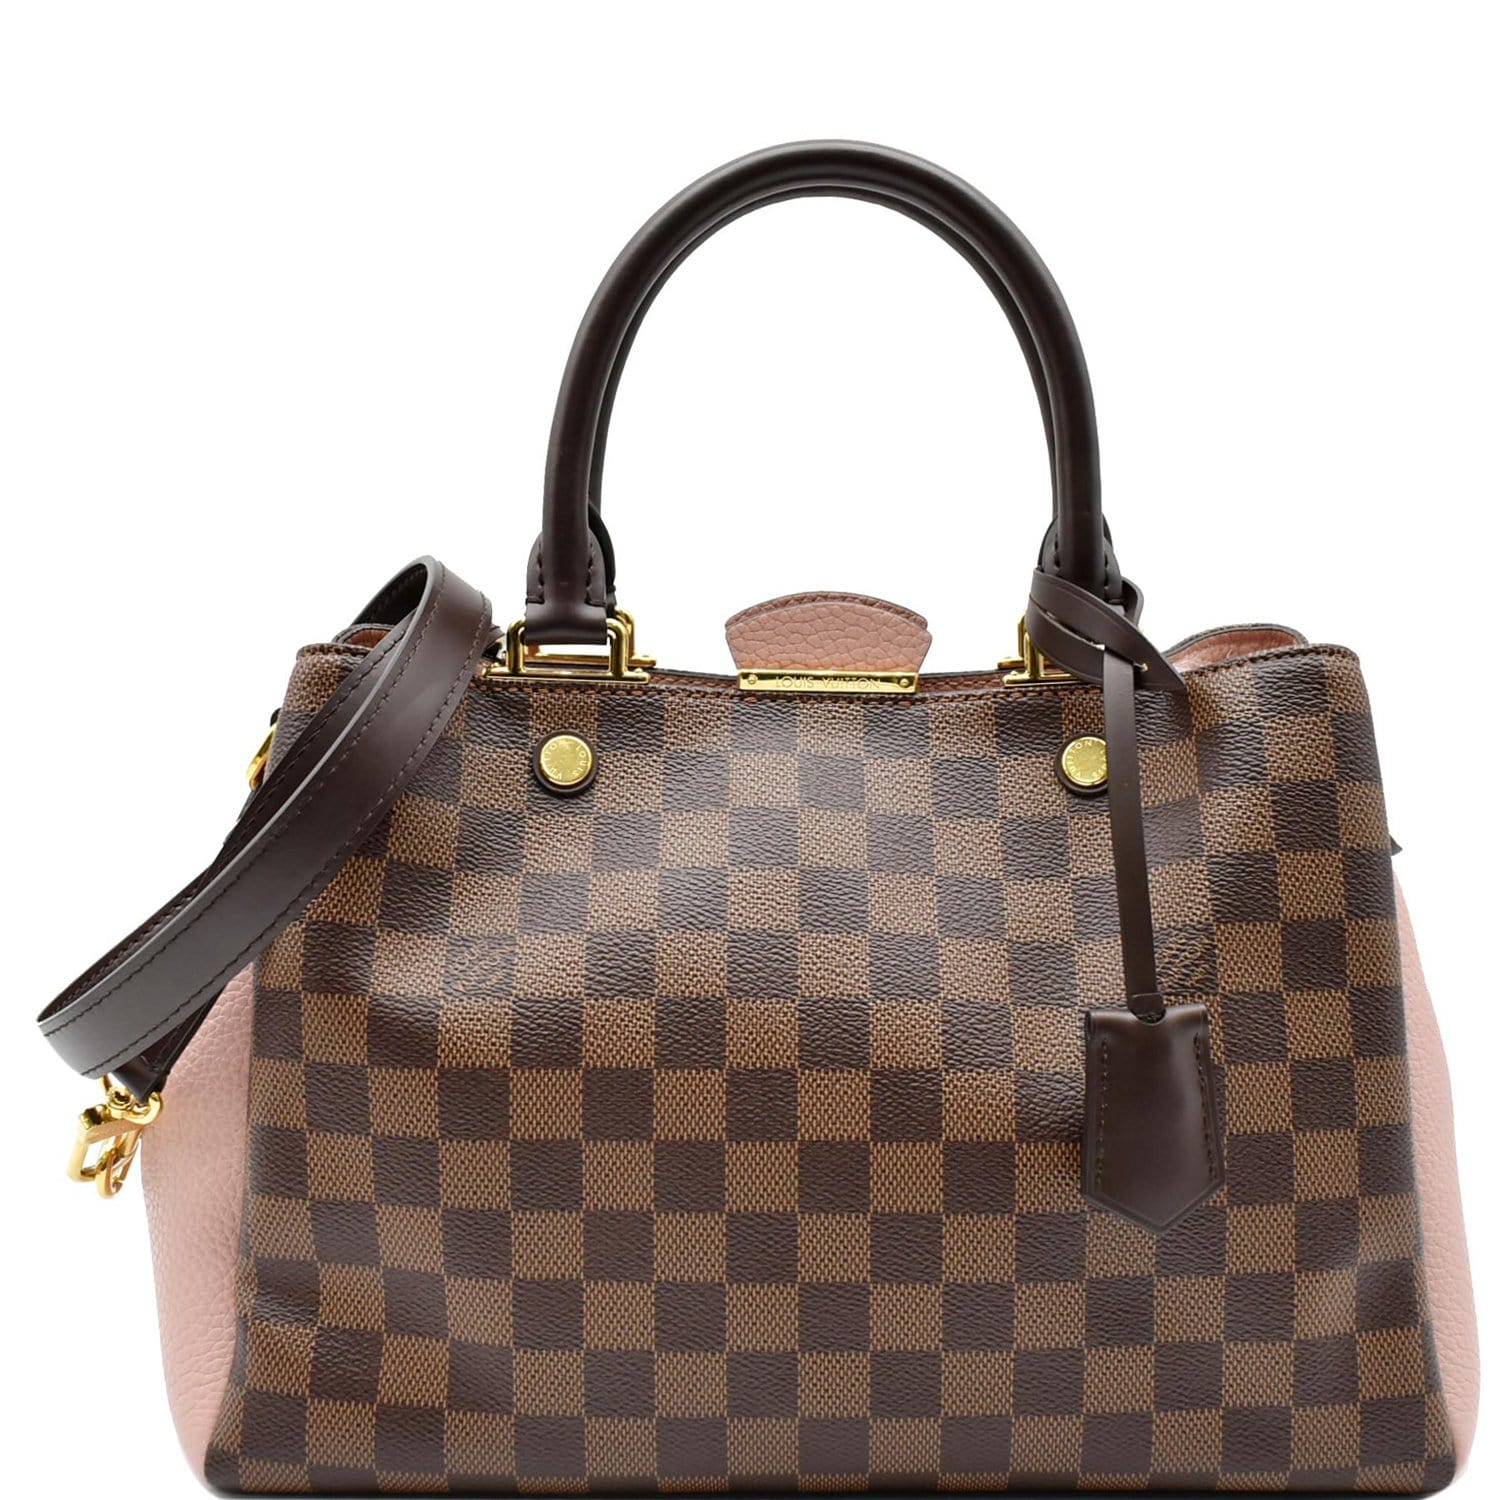 Louis Vuitton Small Louis Vuitton Damier Ebene Bags & Handbags for Women, Authenticity Guaranteed